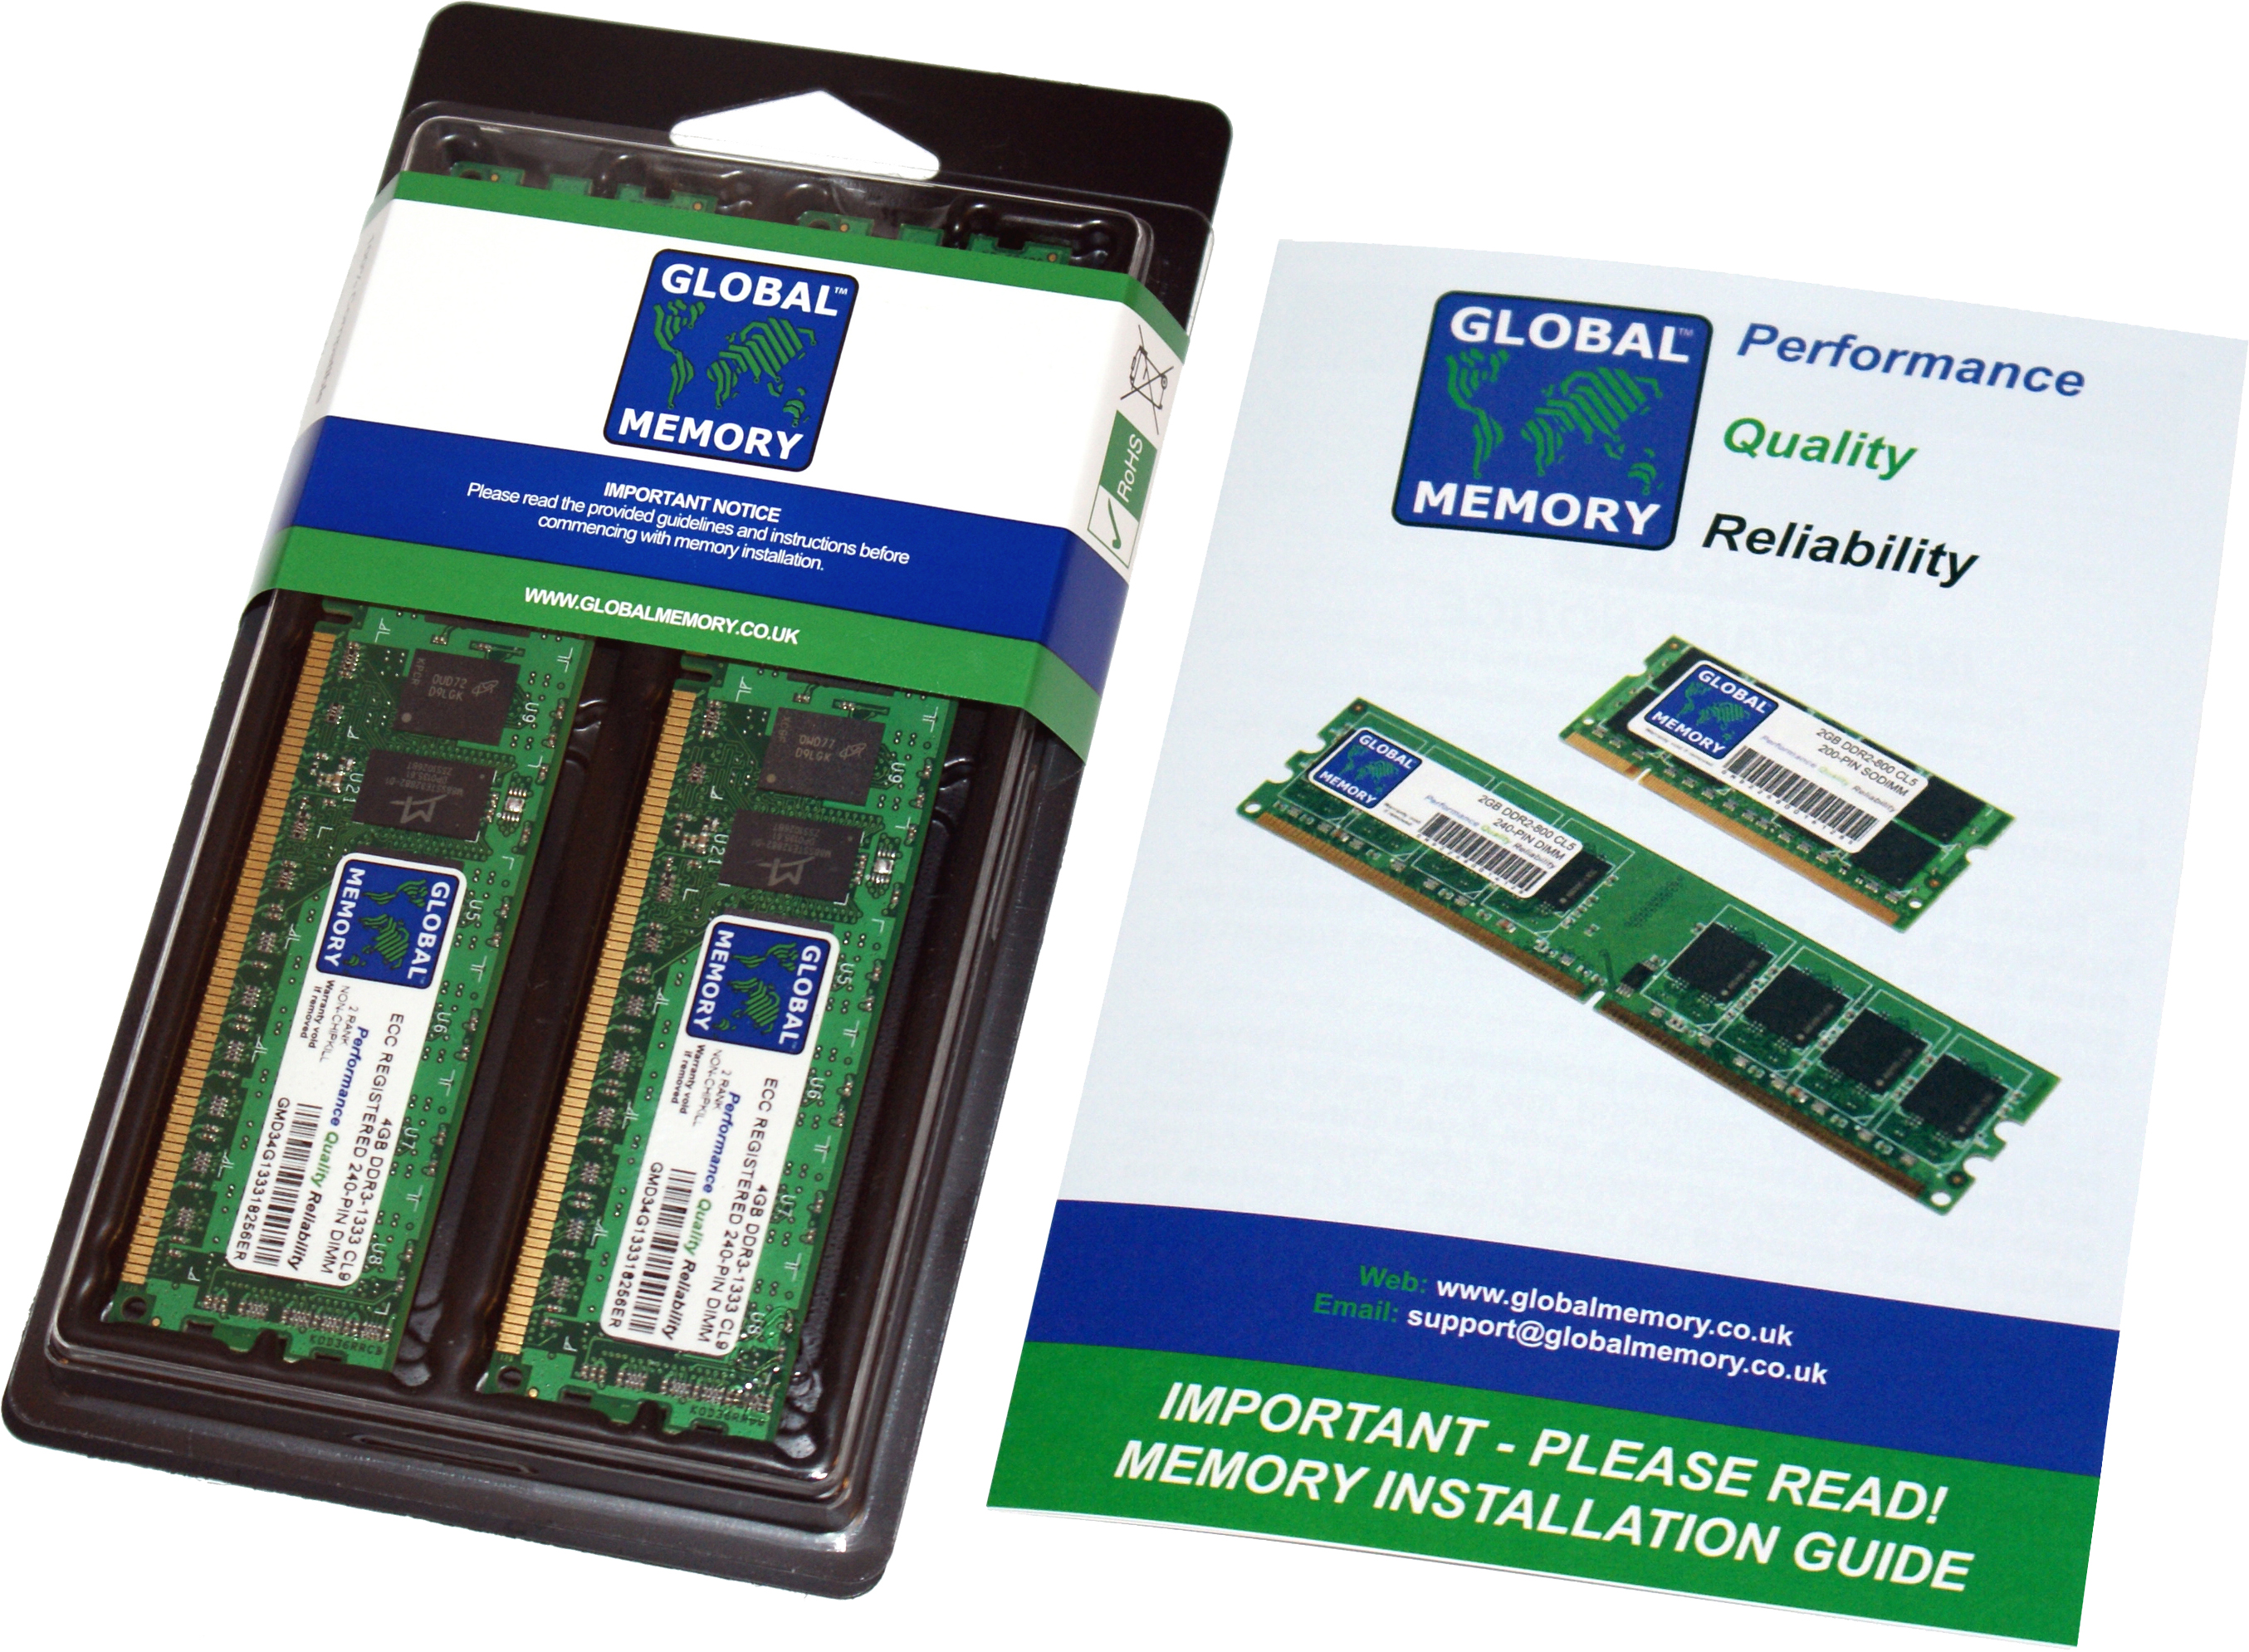 16GB (2 x 8GB) DDR4 2400MHz PC4-19200 288-PIN ECC REGISTERED DIMM (RDIMM) MEMORY RAM KIT FOR SERVERS/WORKSTATIONS/MOTHERBOARDS (2 RANK KIT CHIPKILL)